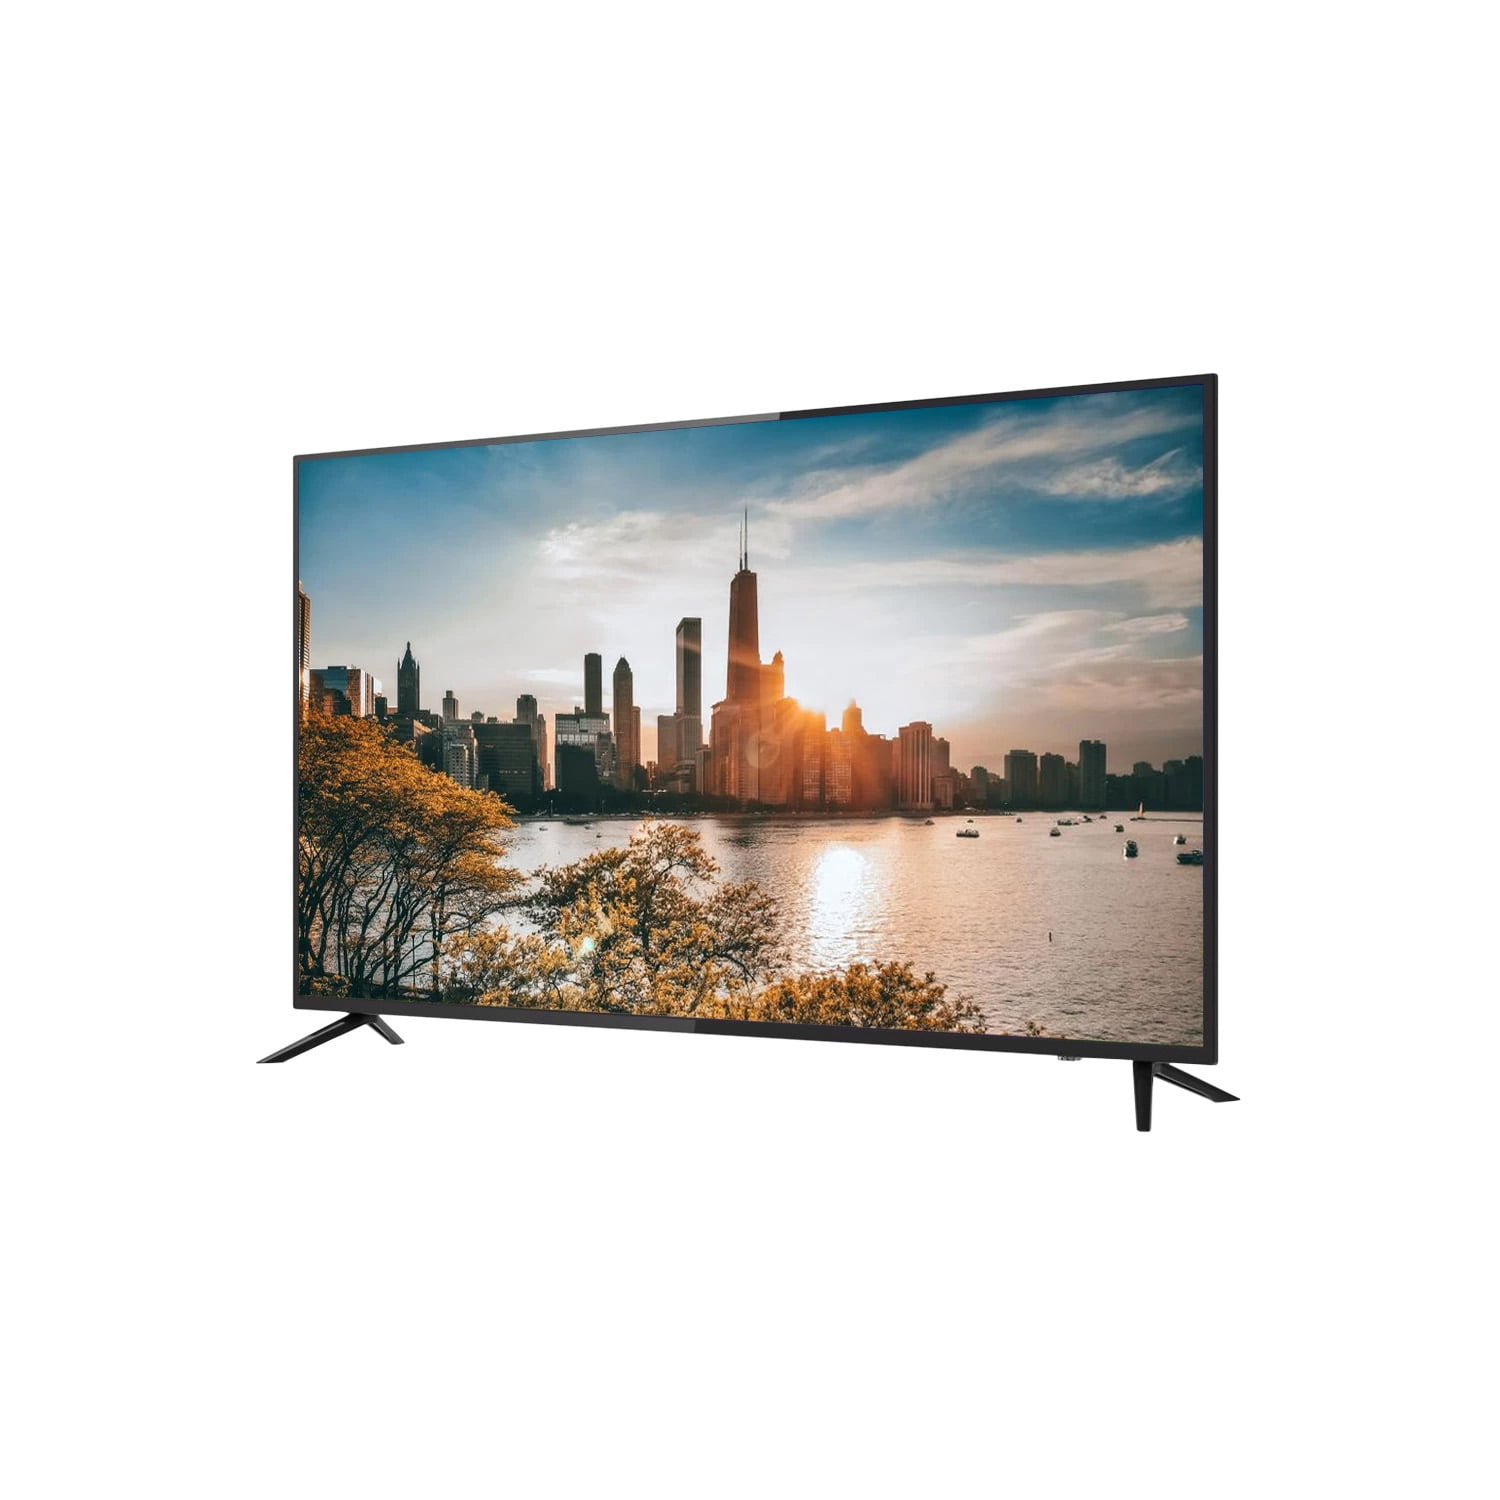 قیمت + خرید تلویزیون ال ای دی هوشمند سام الکترونیک 55 اینچ مدل UA55TU6550TH- خانگیتو